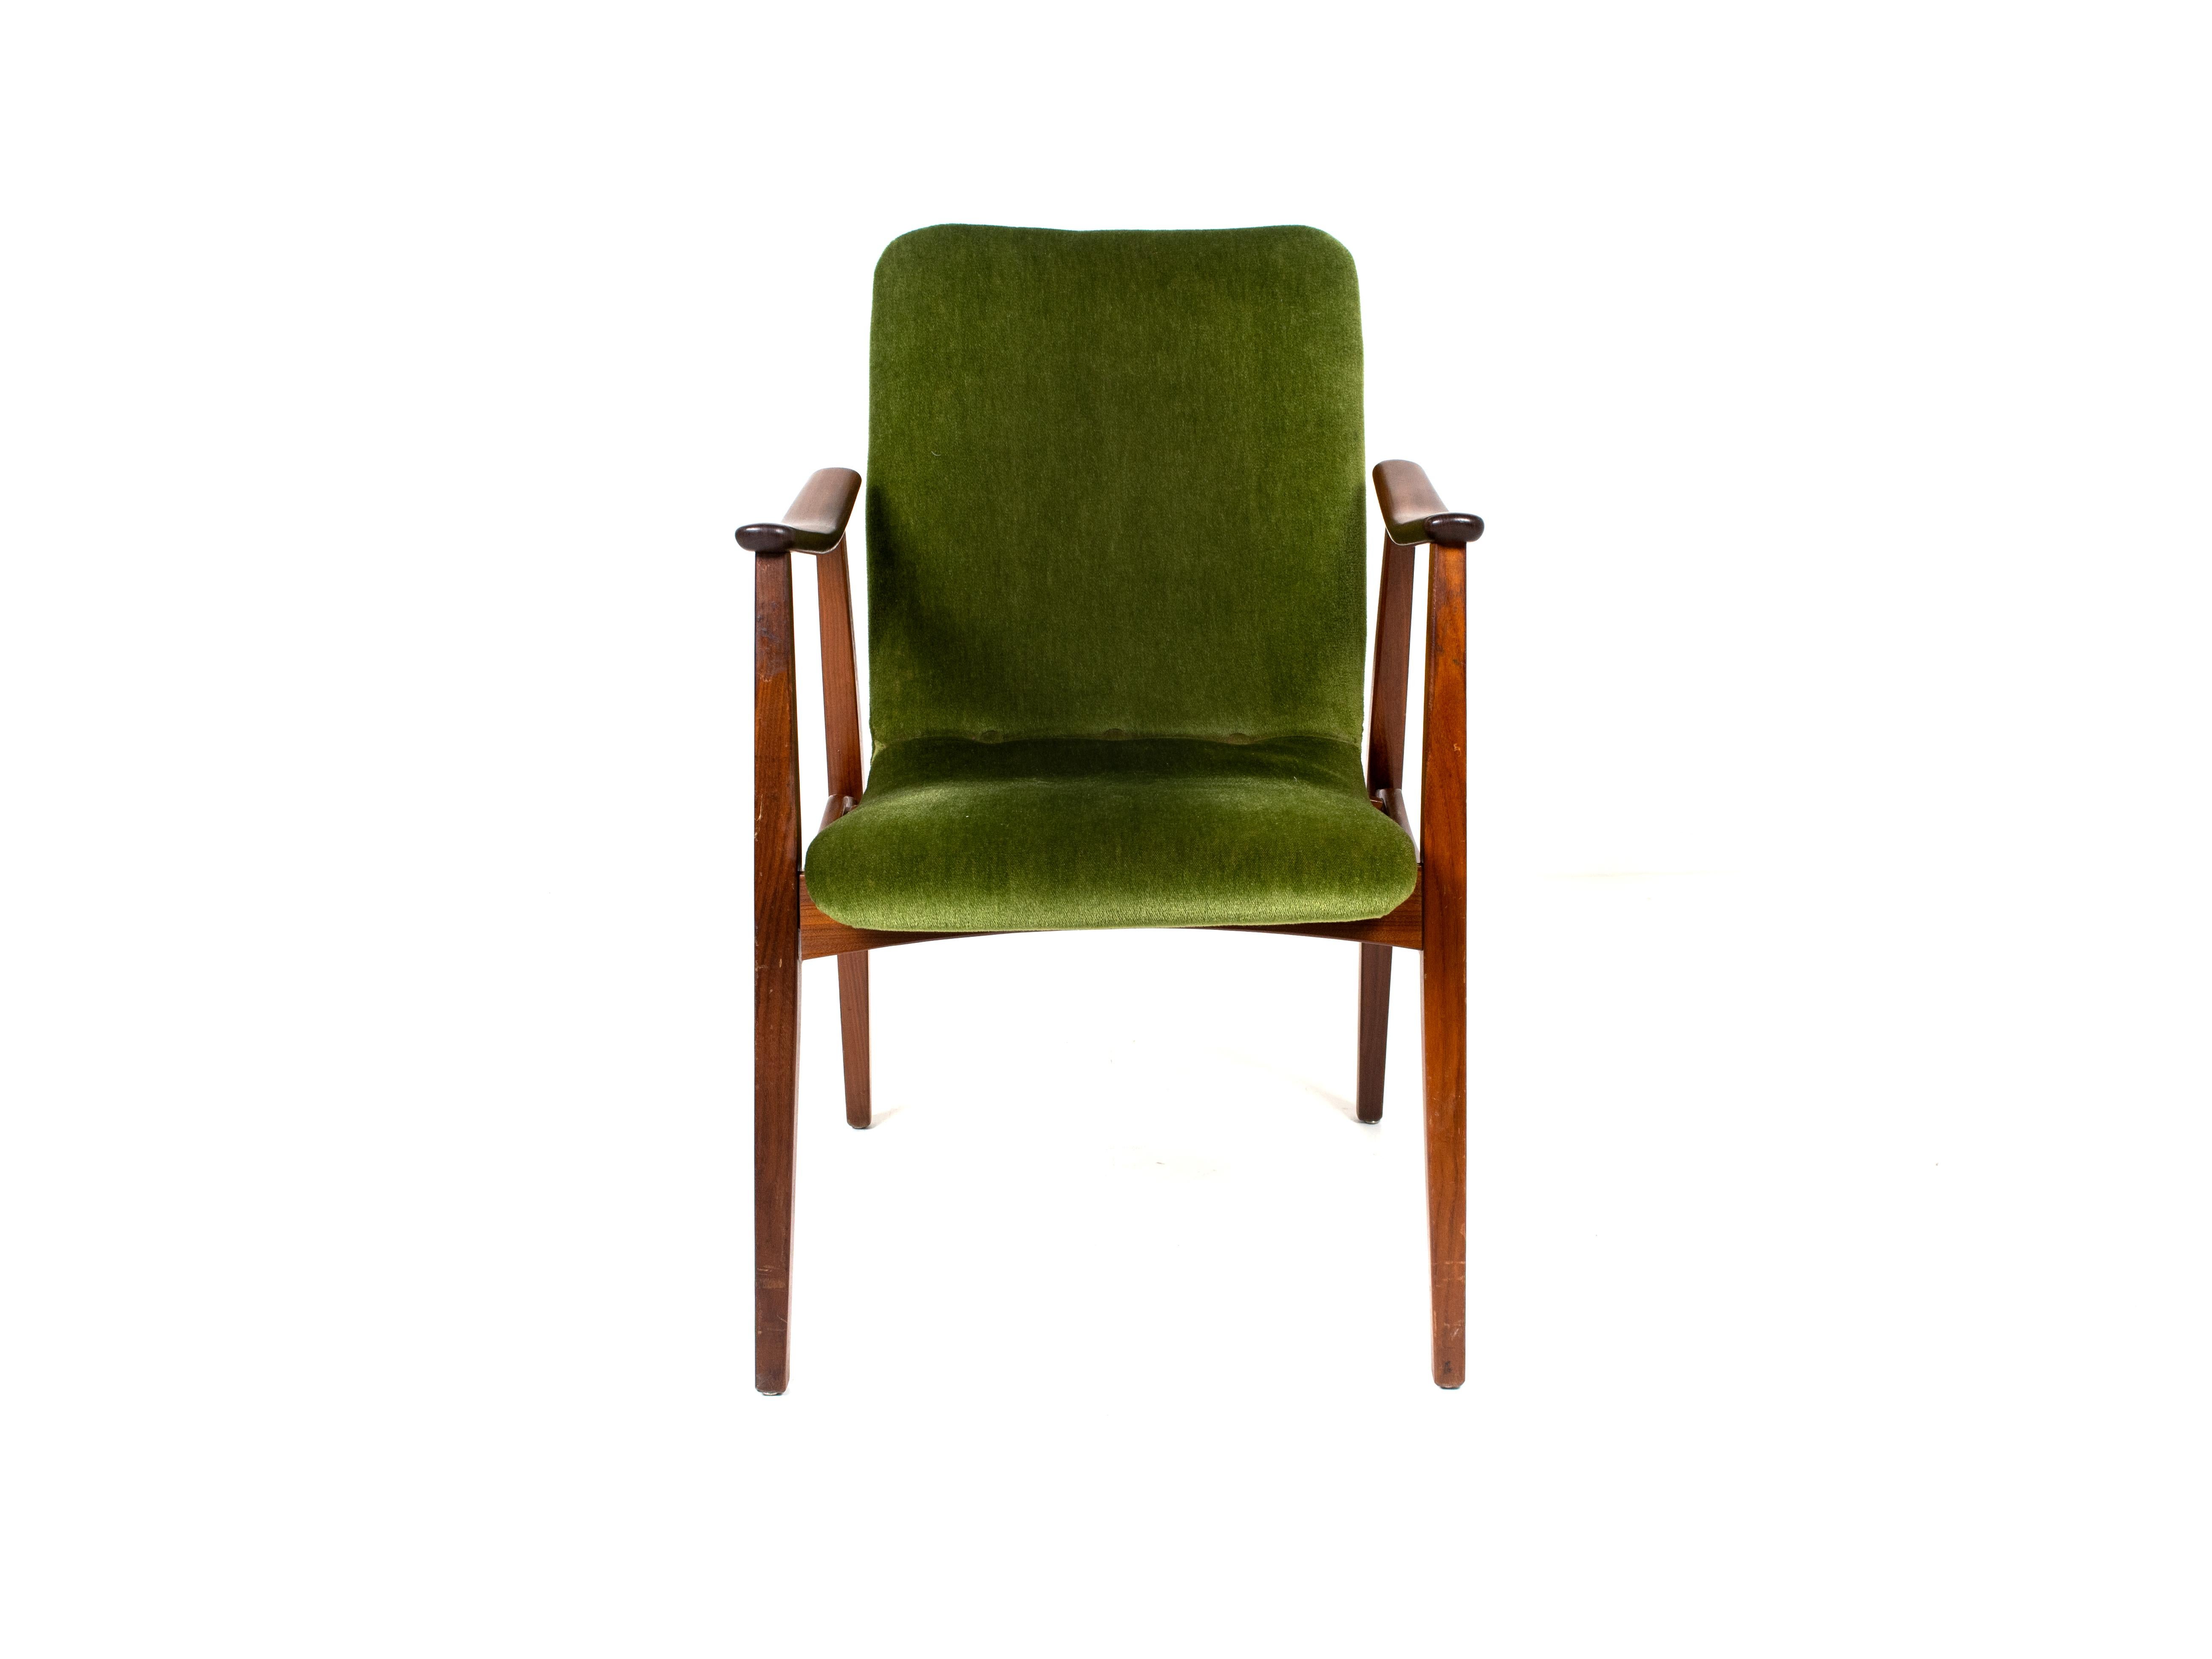 Mid-Century Modern Vintage Lounge Chair in Teak and Green Velvet, Louis Van Teeffelen Style, 1960s